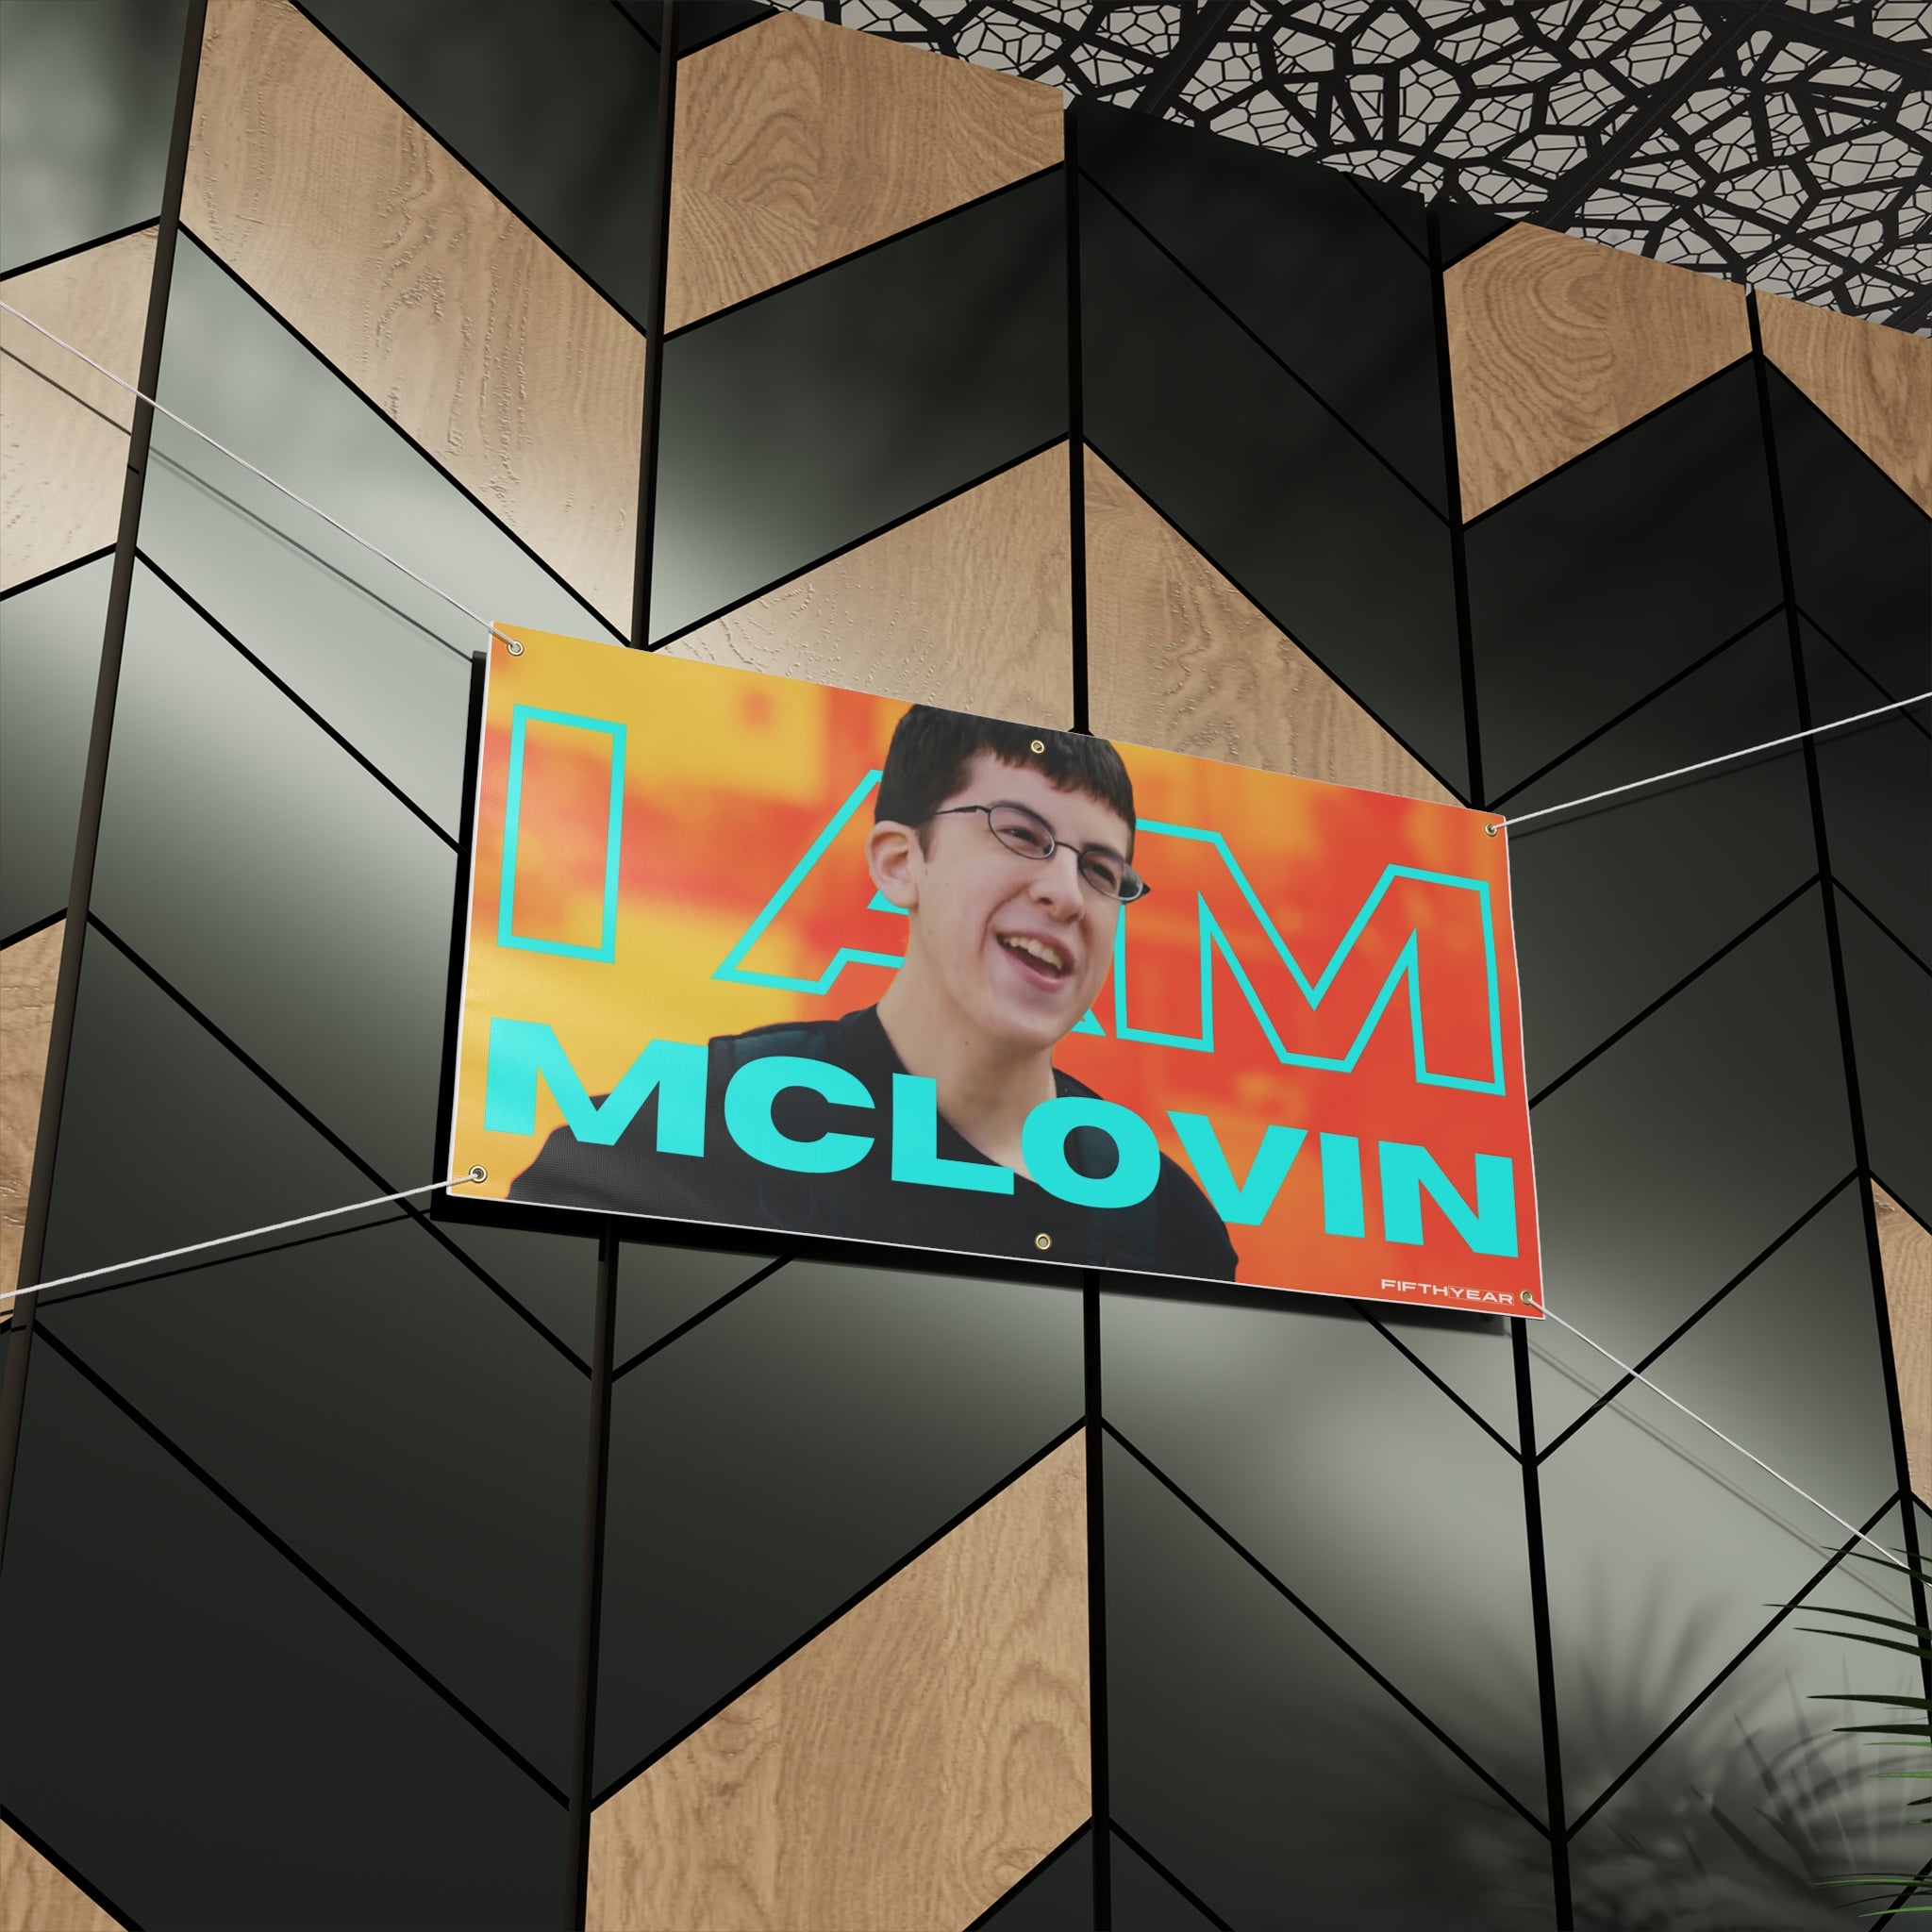 I AM MCLOVIN - Flag